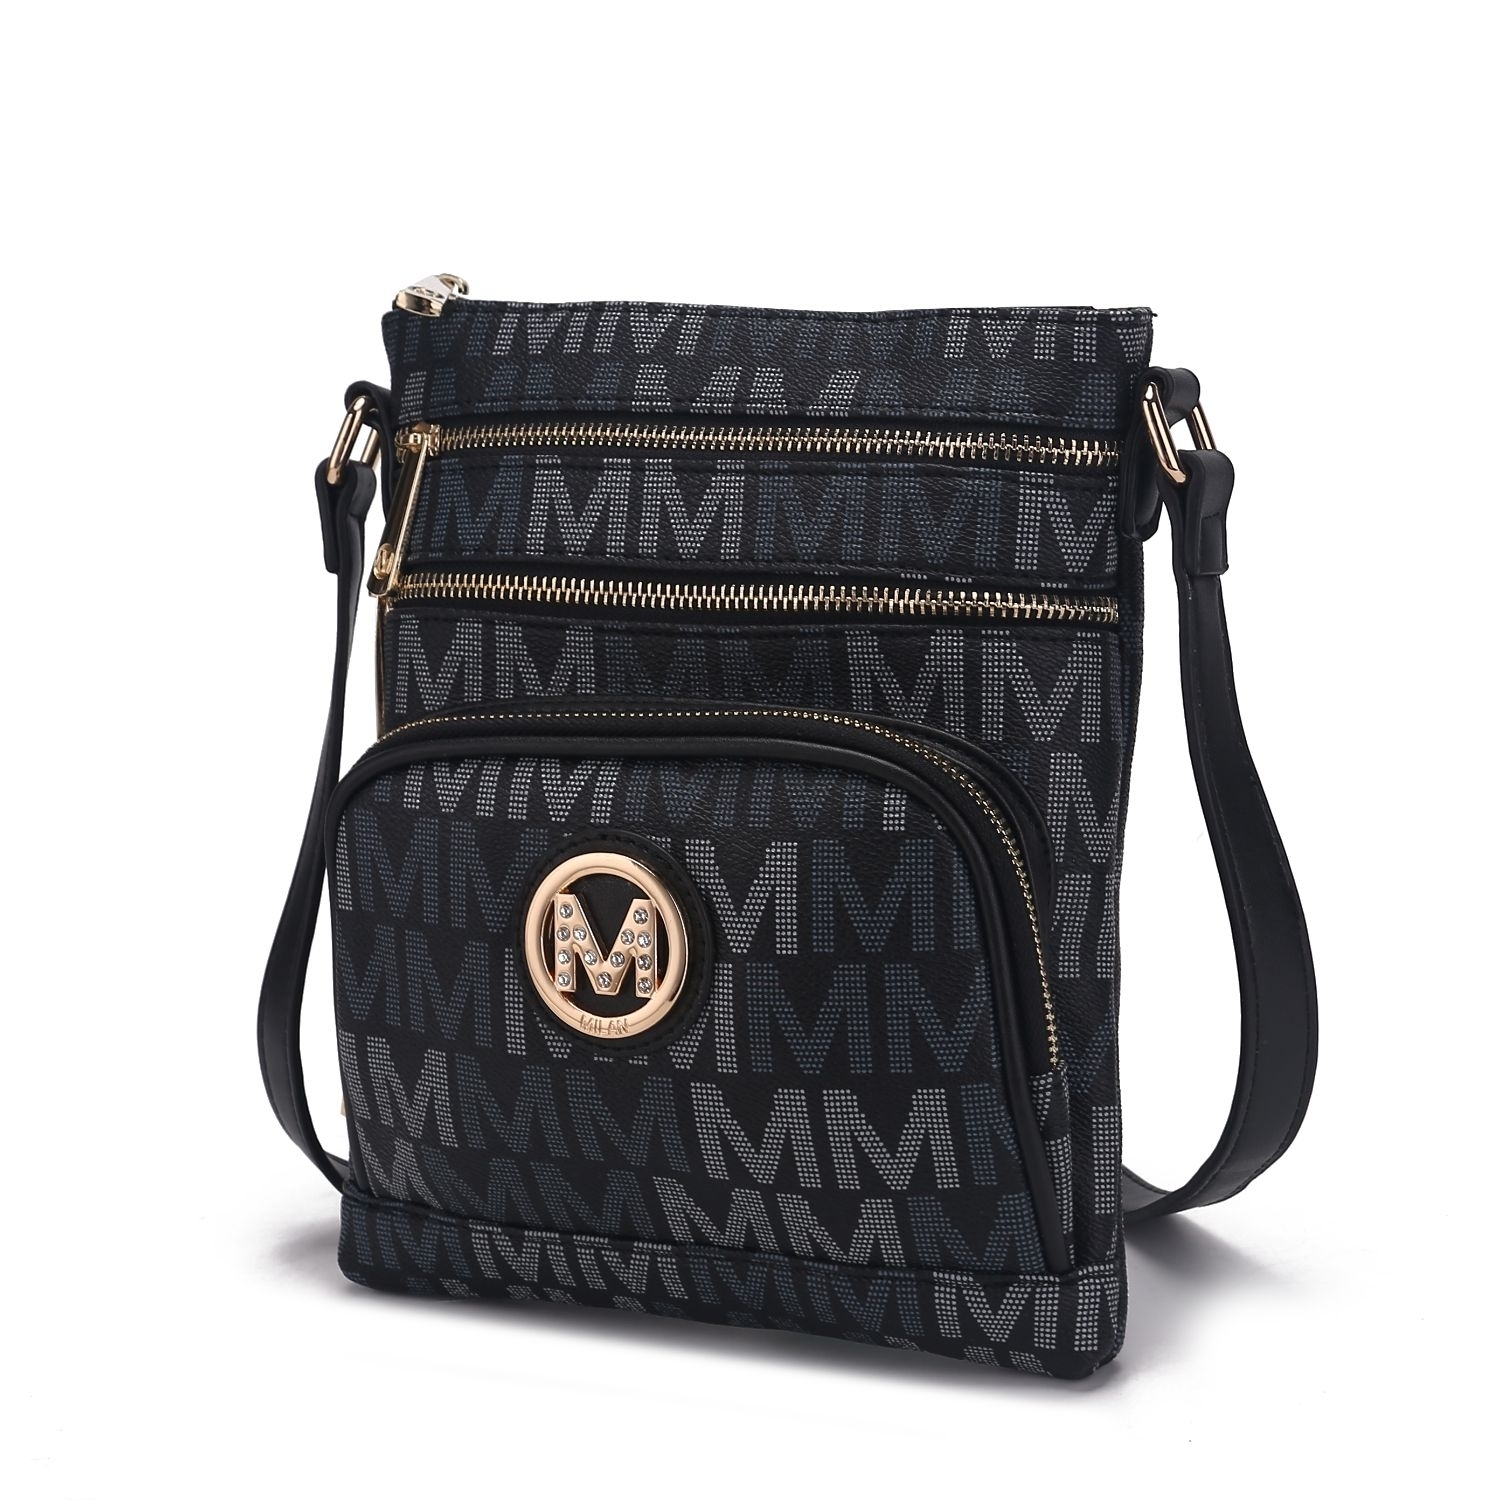 MKF Collection By Mia K. Brie M Signature Crossbody Handbag - Beige